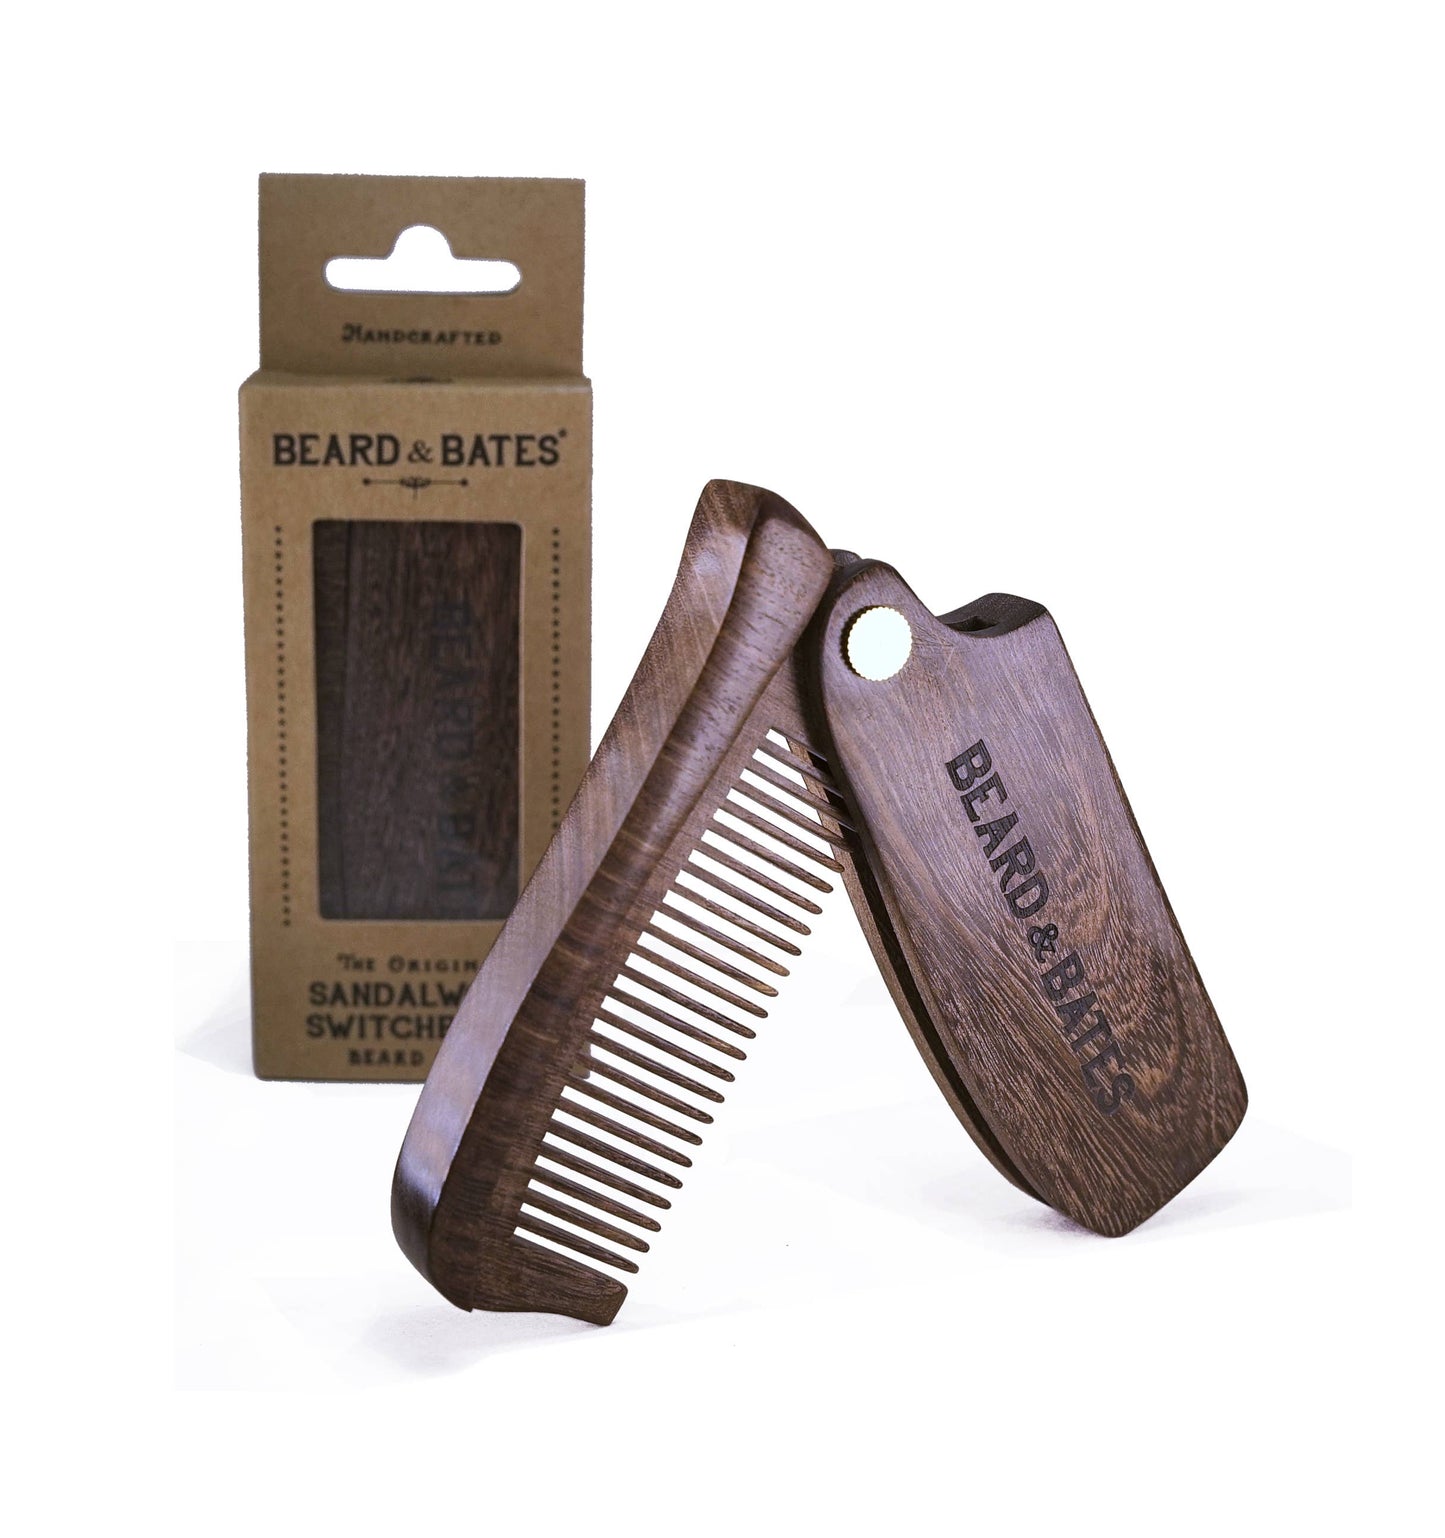 The Sandalwood Switchblade - The Original Wooden Beard Comb